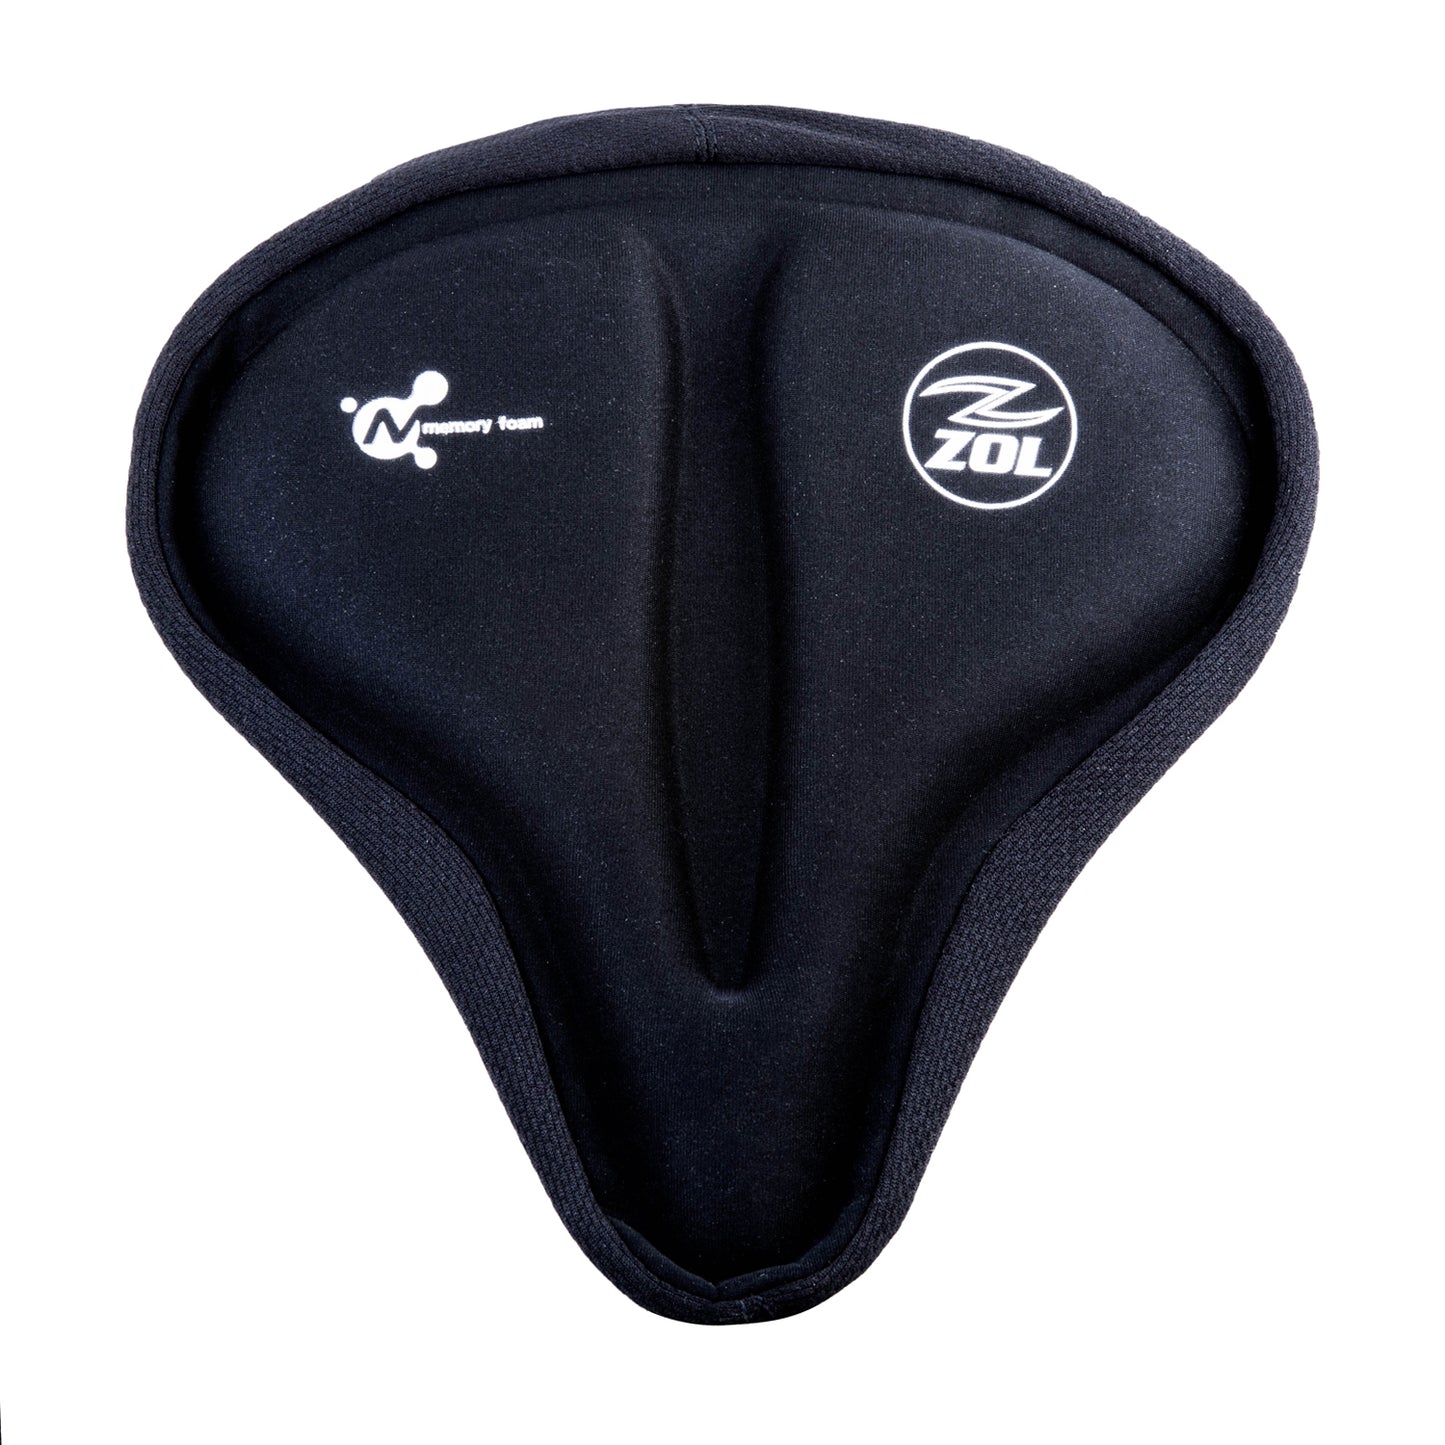 Zol Anti Slip Bike Saddle Cover with Memory Foam Compatible with Peloton bike - Zol Cycling